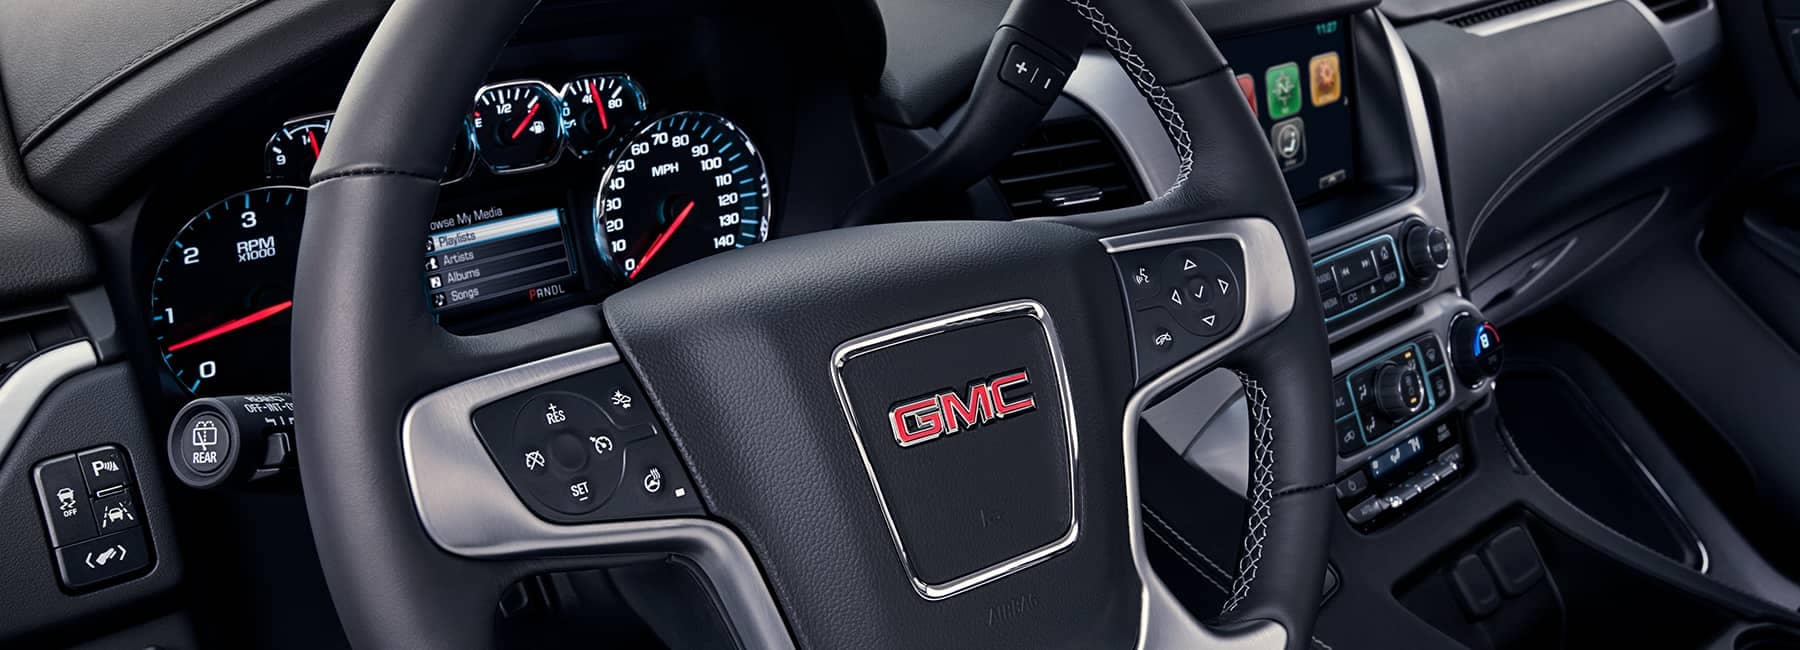 GMC Steering wheel